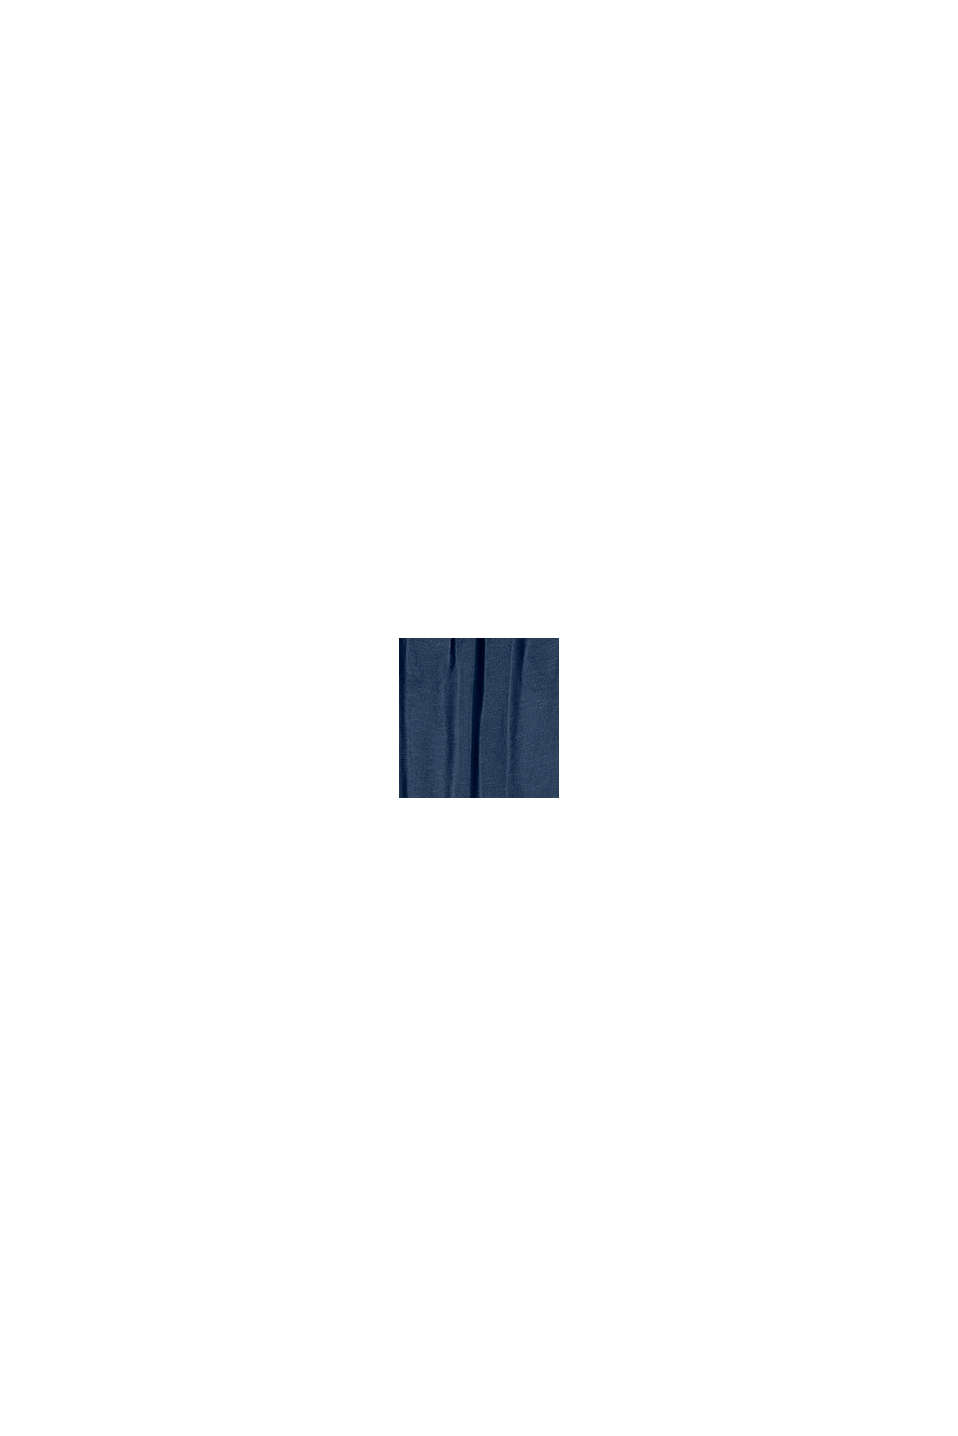 Jersey-Jumpsuit aus 100% Baumwolle, PETROL BLUE, swatch